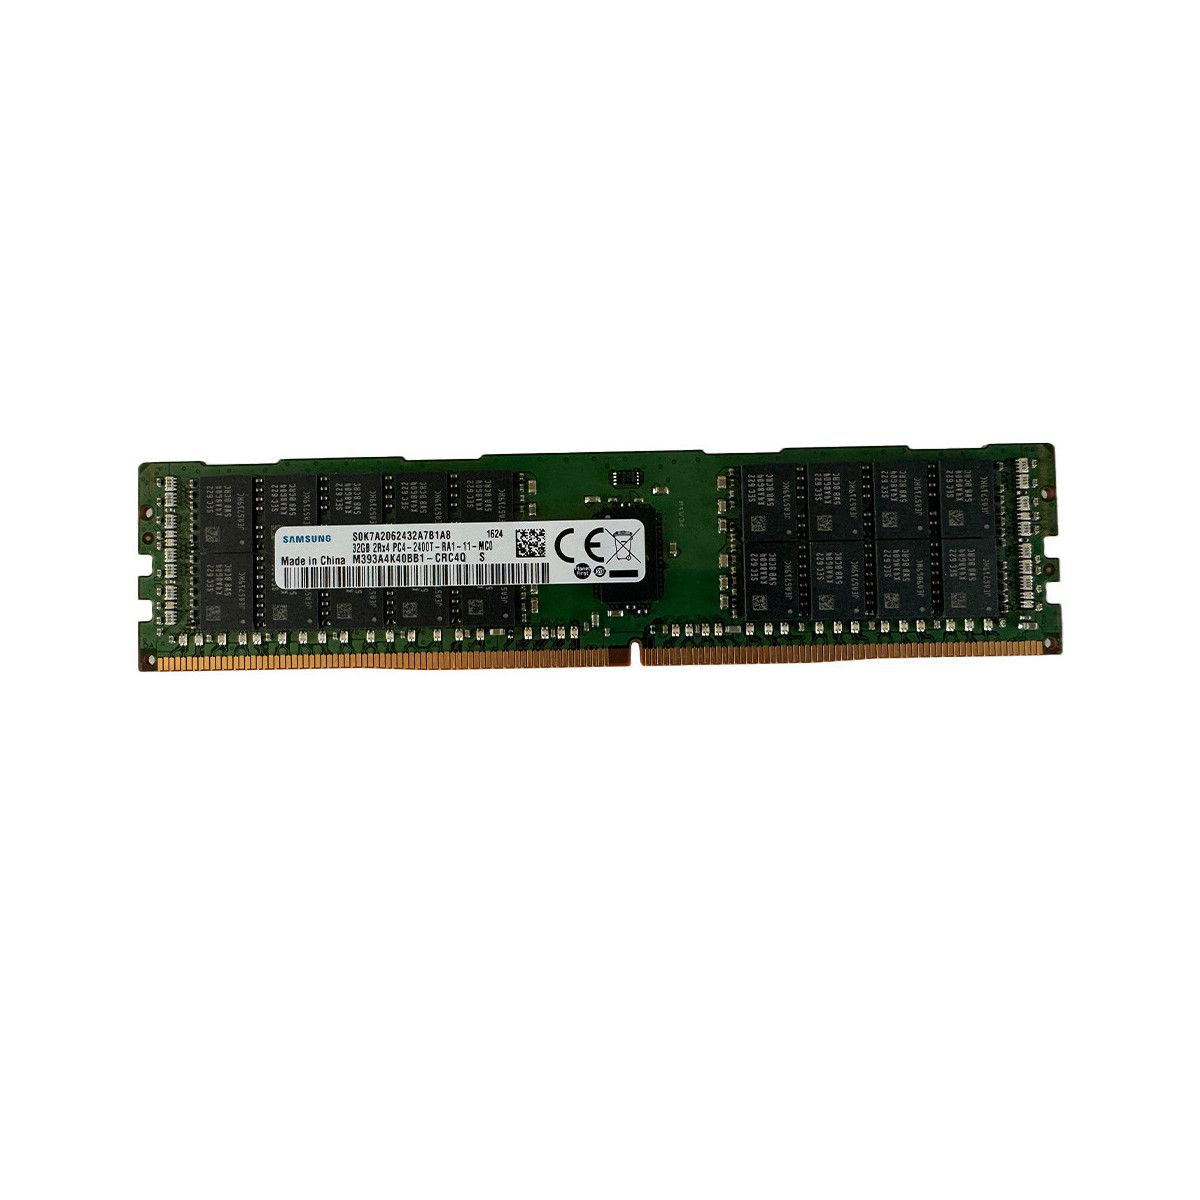 805351-B21-MS - Memstar 1x 32GB DDR4-2400 RDIMM PC4-19200T-R - Mem-Star Compatibile OEM Memoria 1 - Memstar 